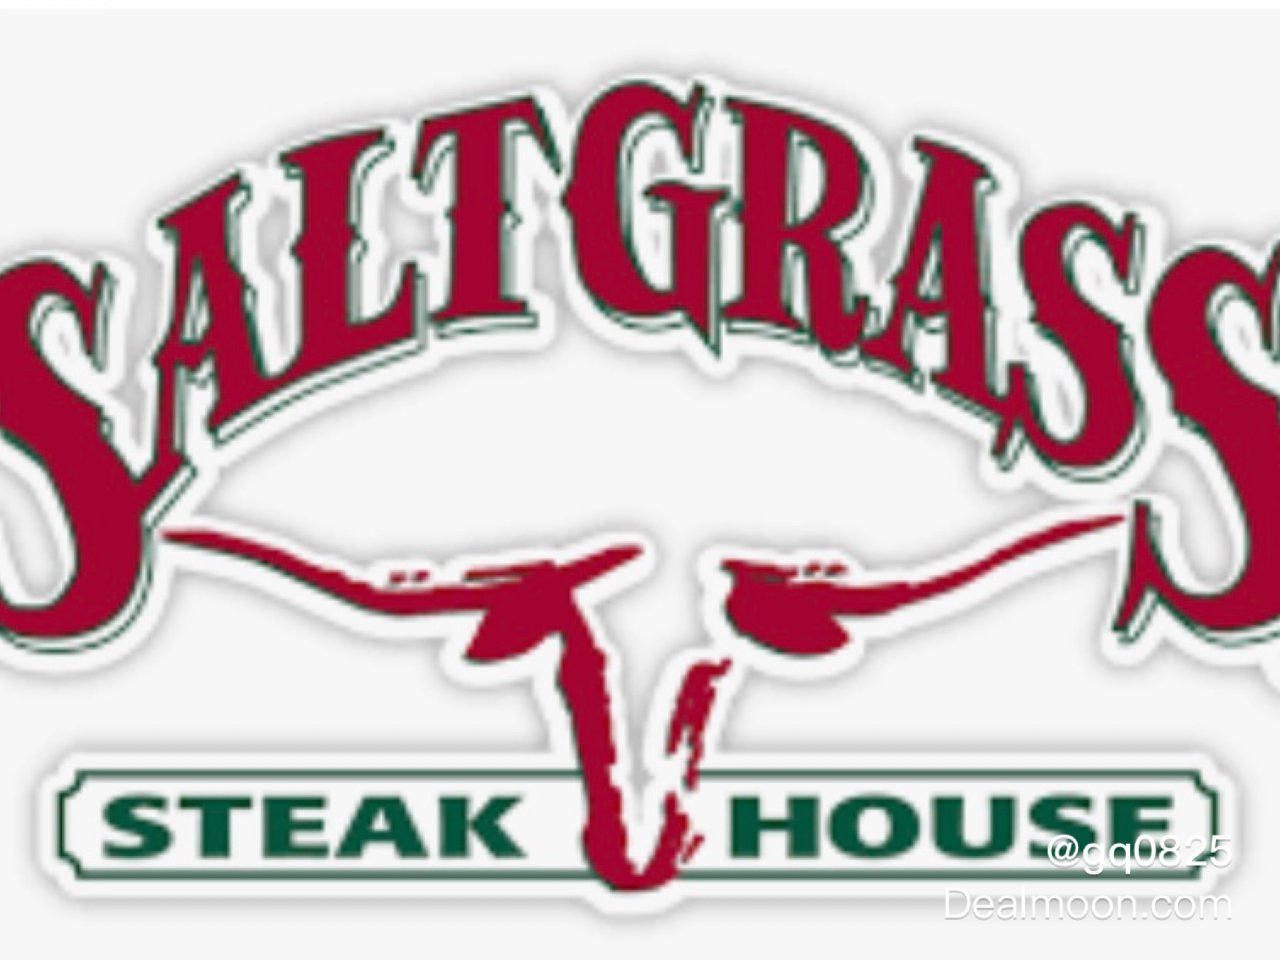 saltgrass steakhouse